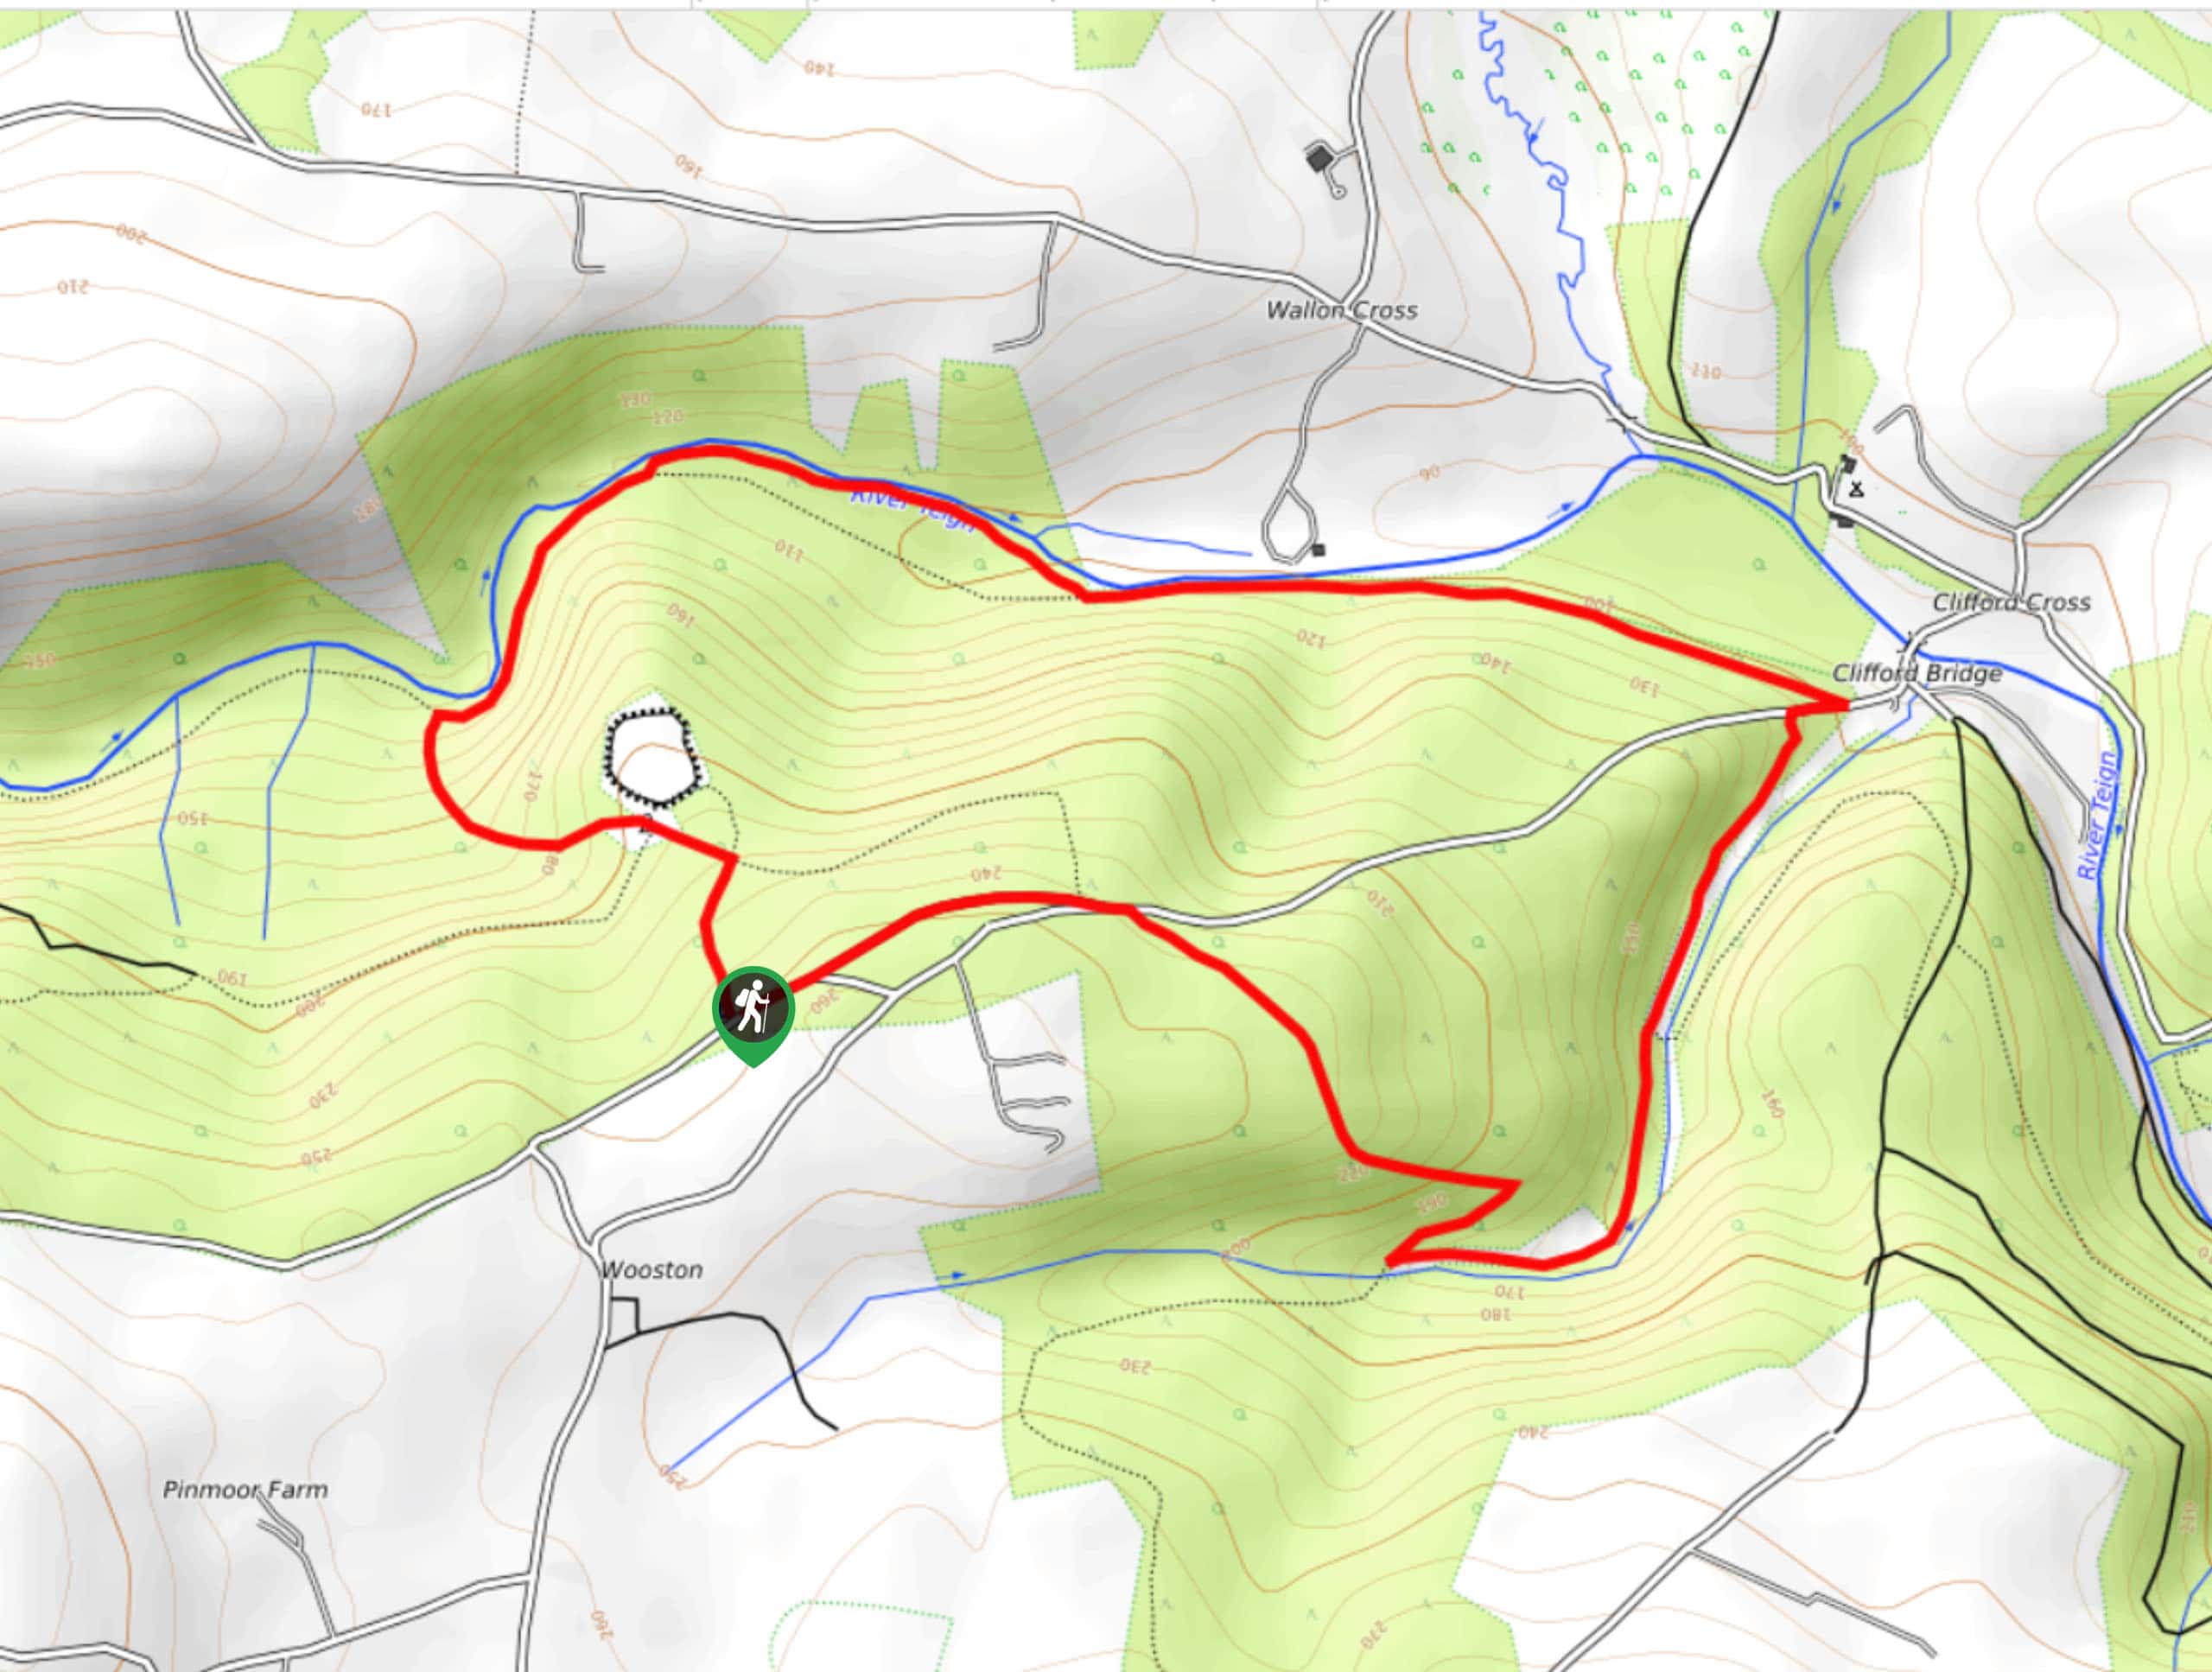 Cod Wood and River Teign Circular Walk Map